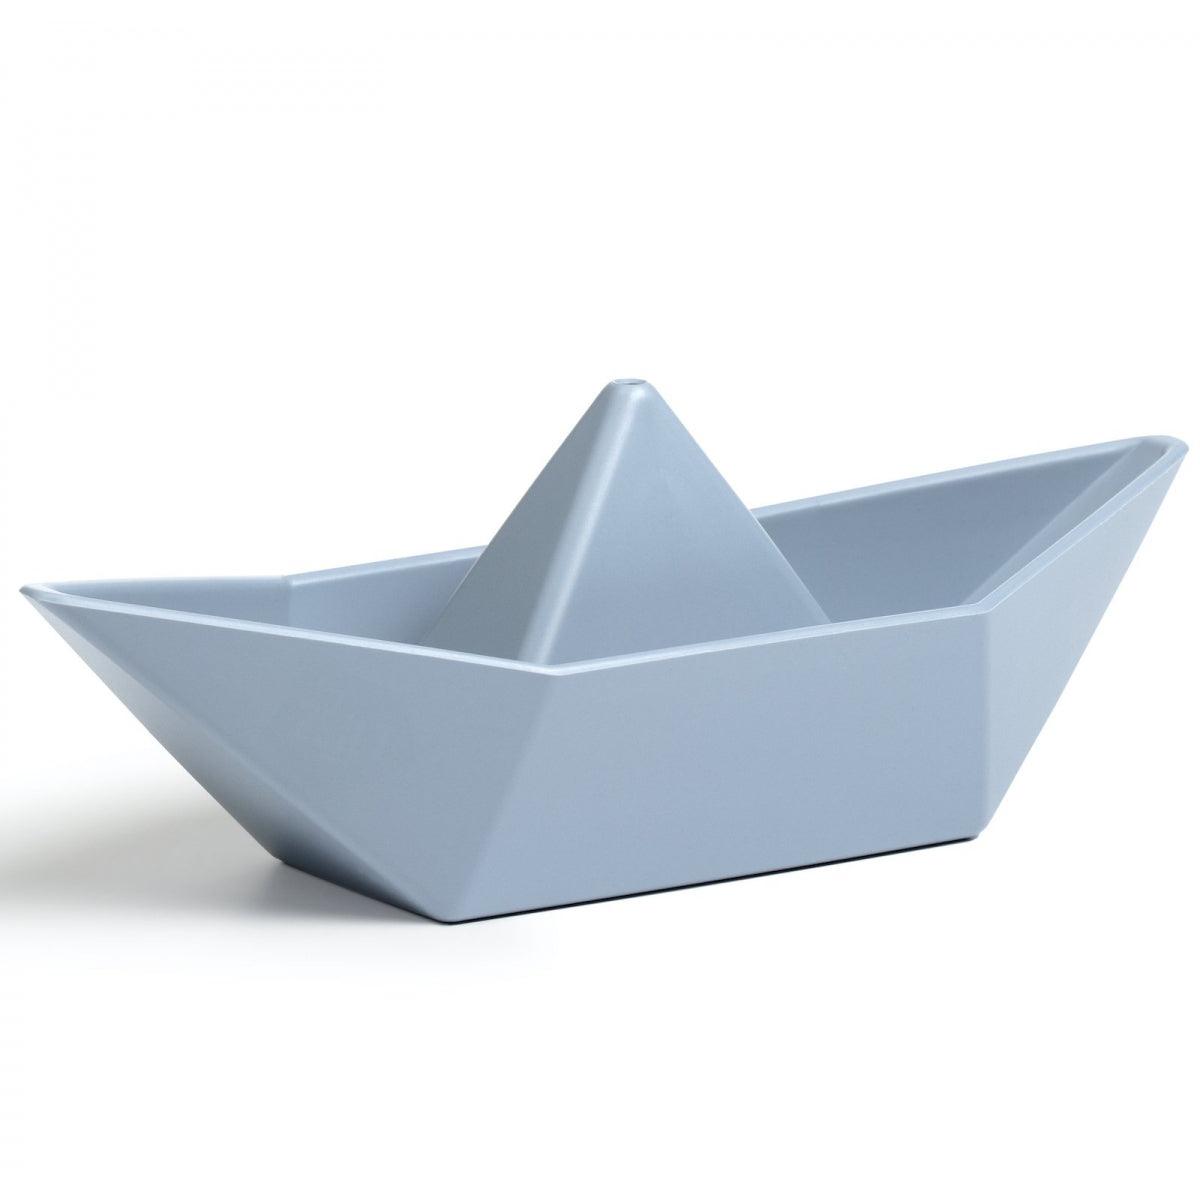 Zsilt: łódka do kąpieli Boat - Noski Noski